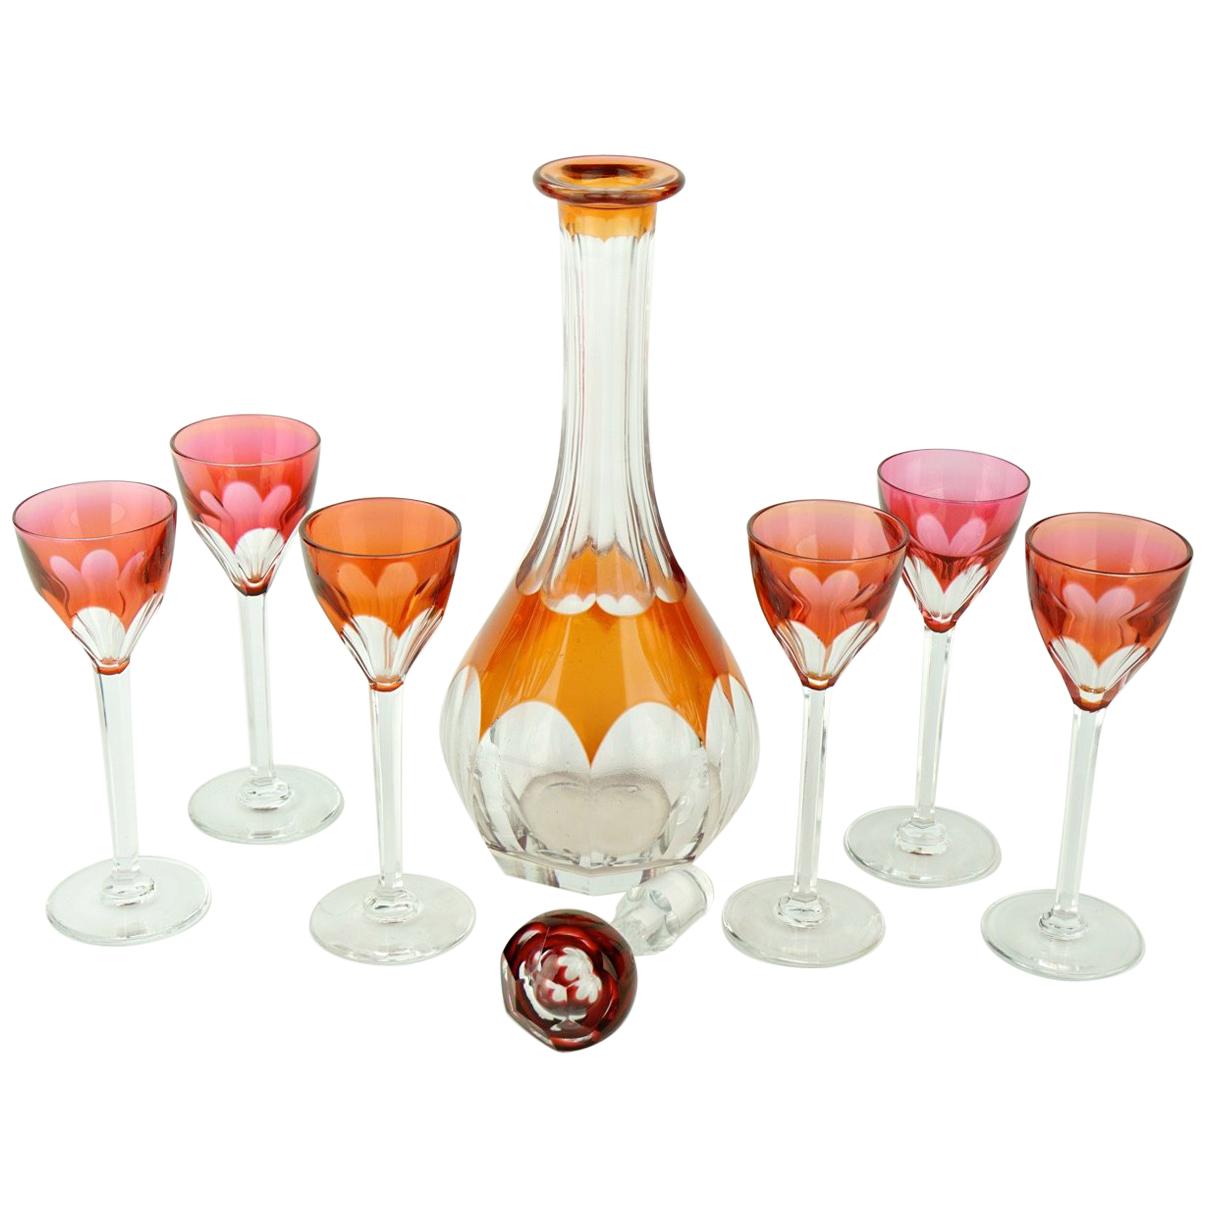 Art Deco Orange Val Saint Lambert Gondole Liquor Service Decanter and Glasses For Sale